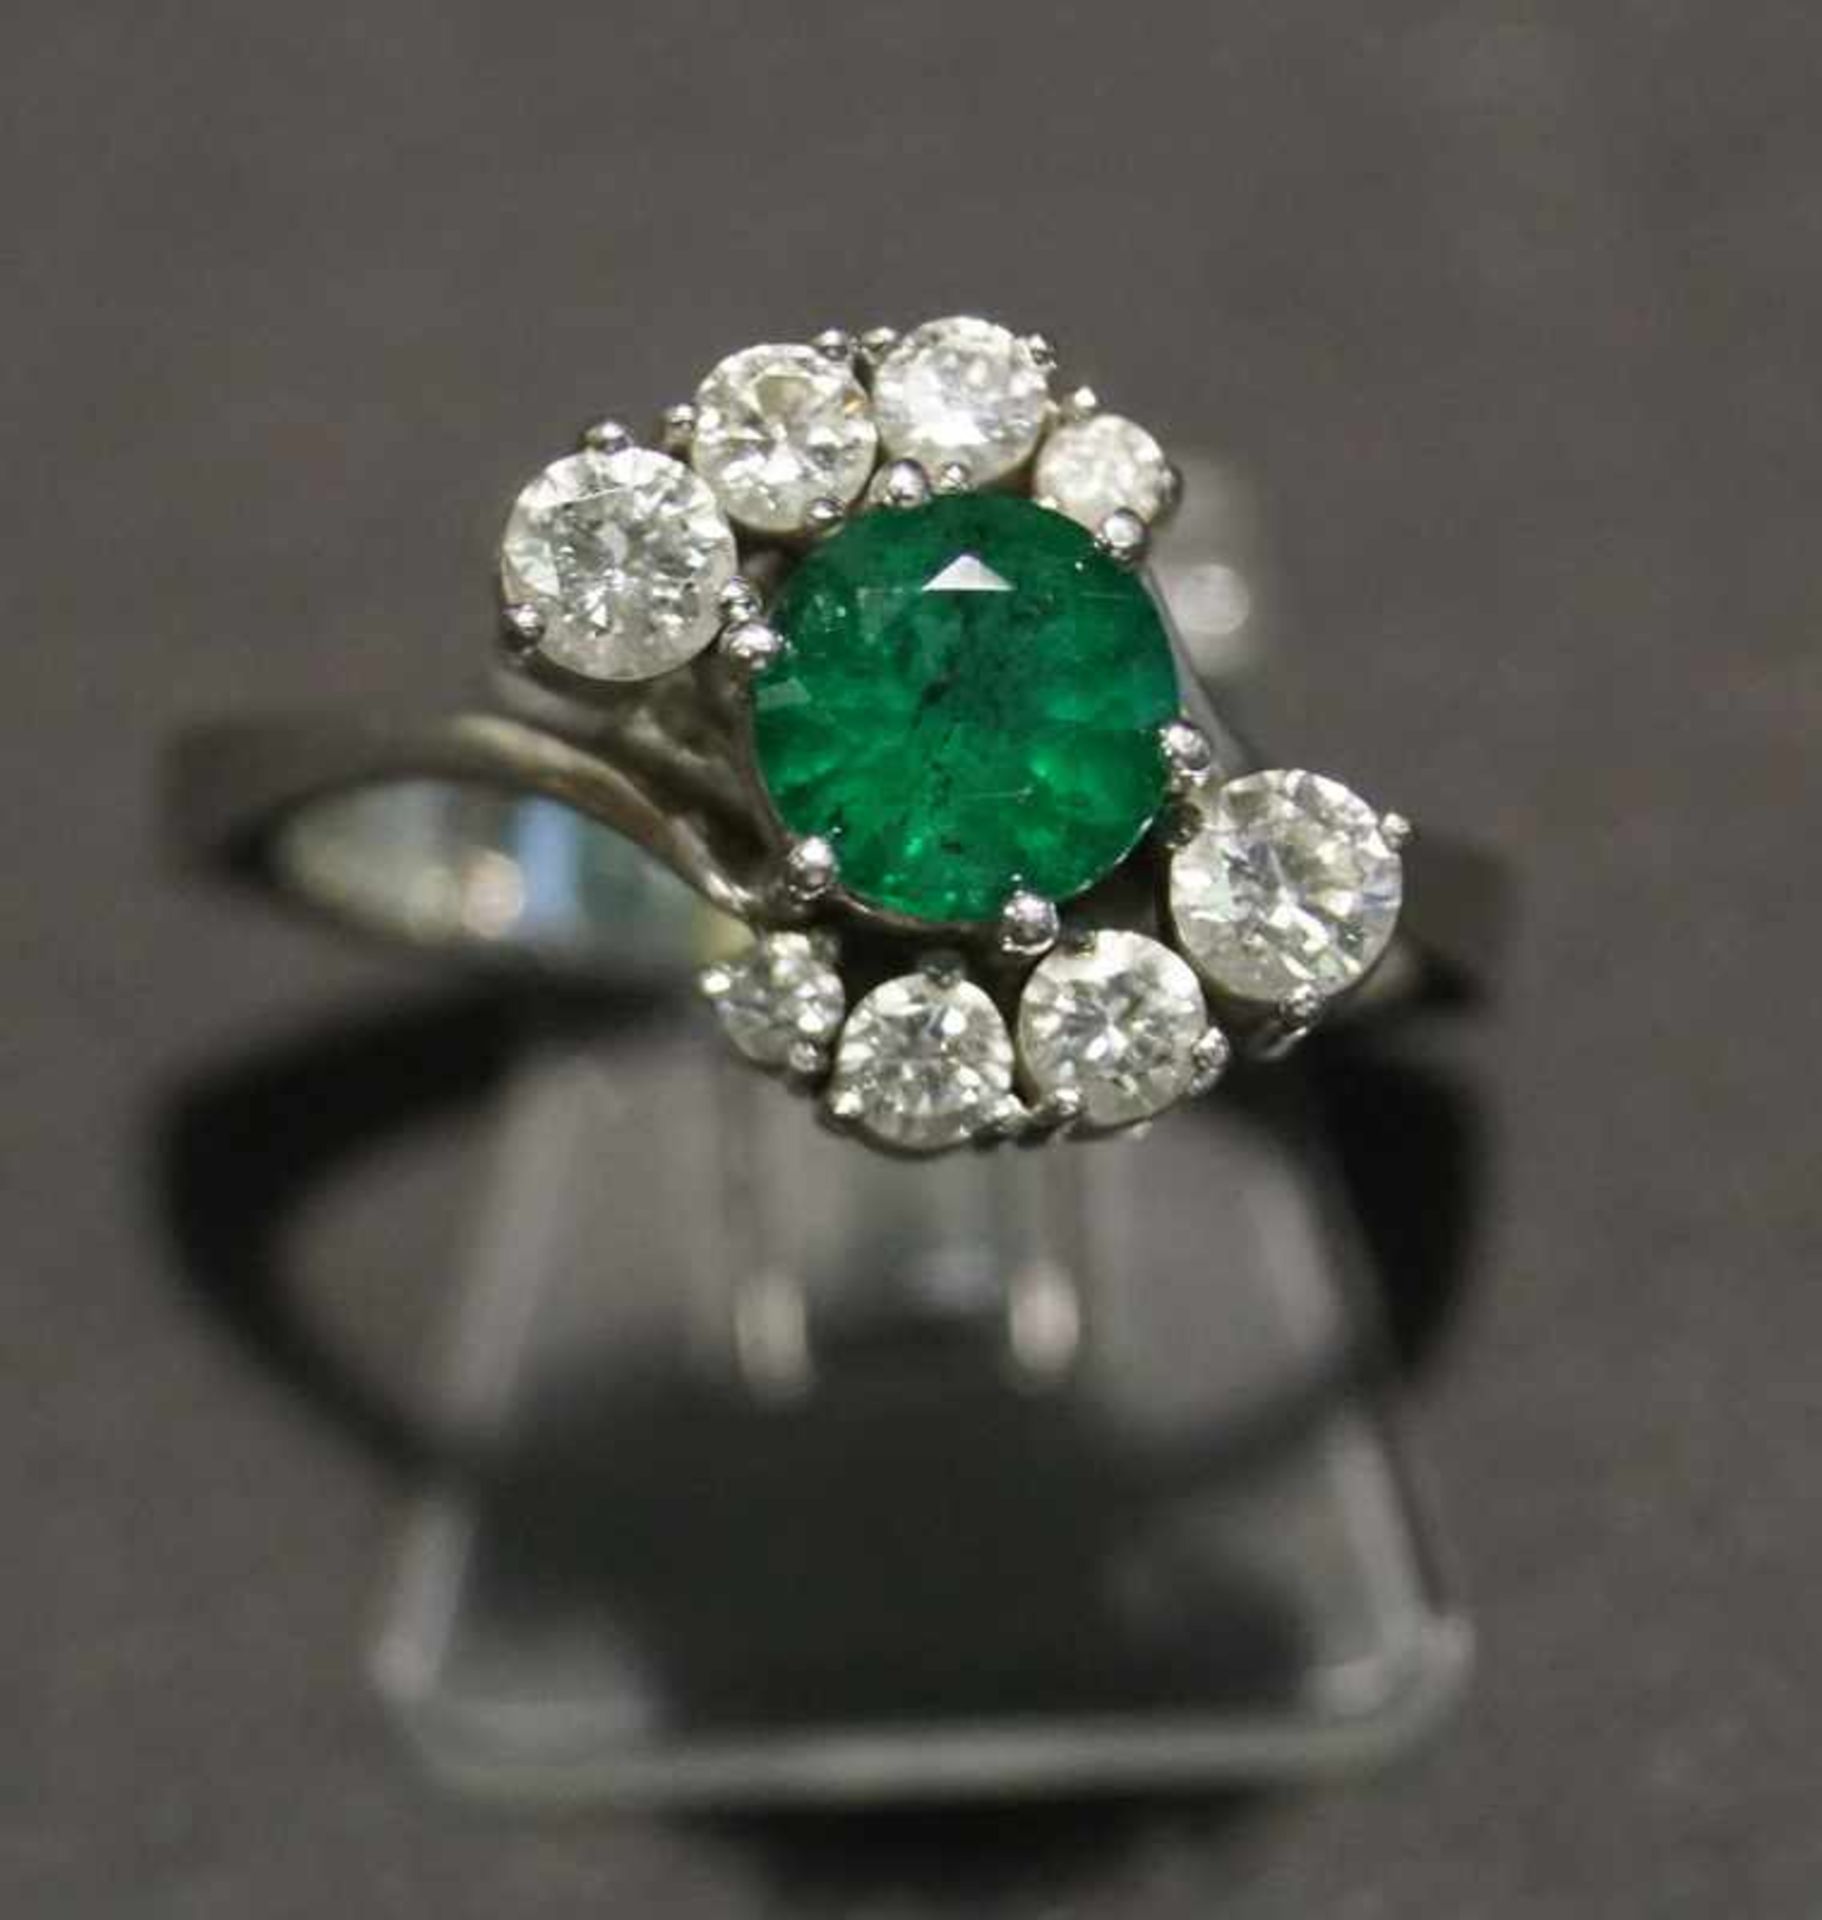 Smaragd Simili-Brillant-Ring, 750WG